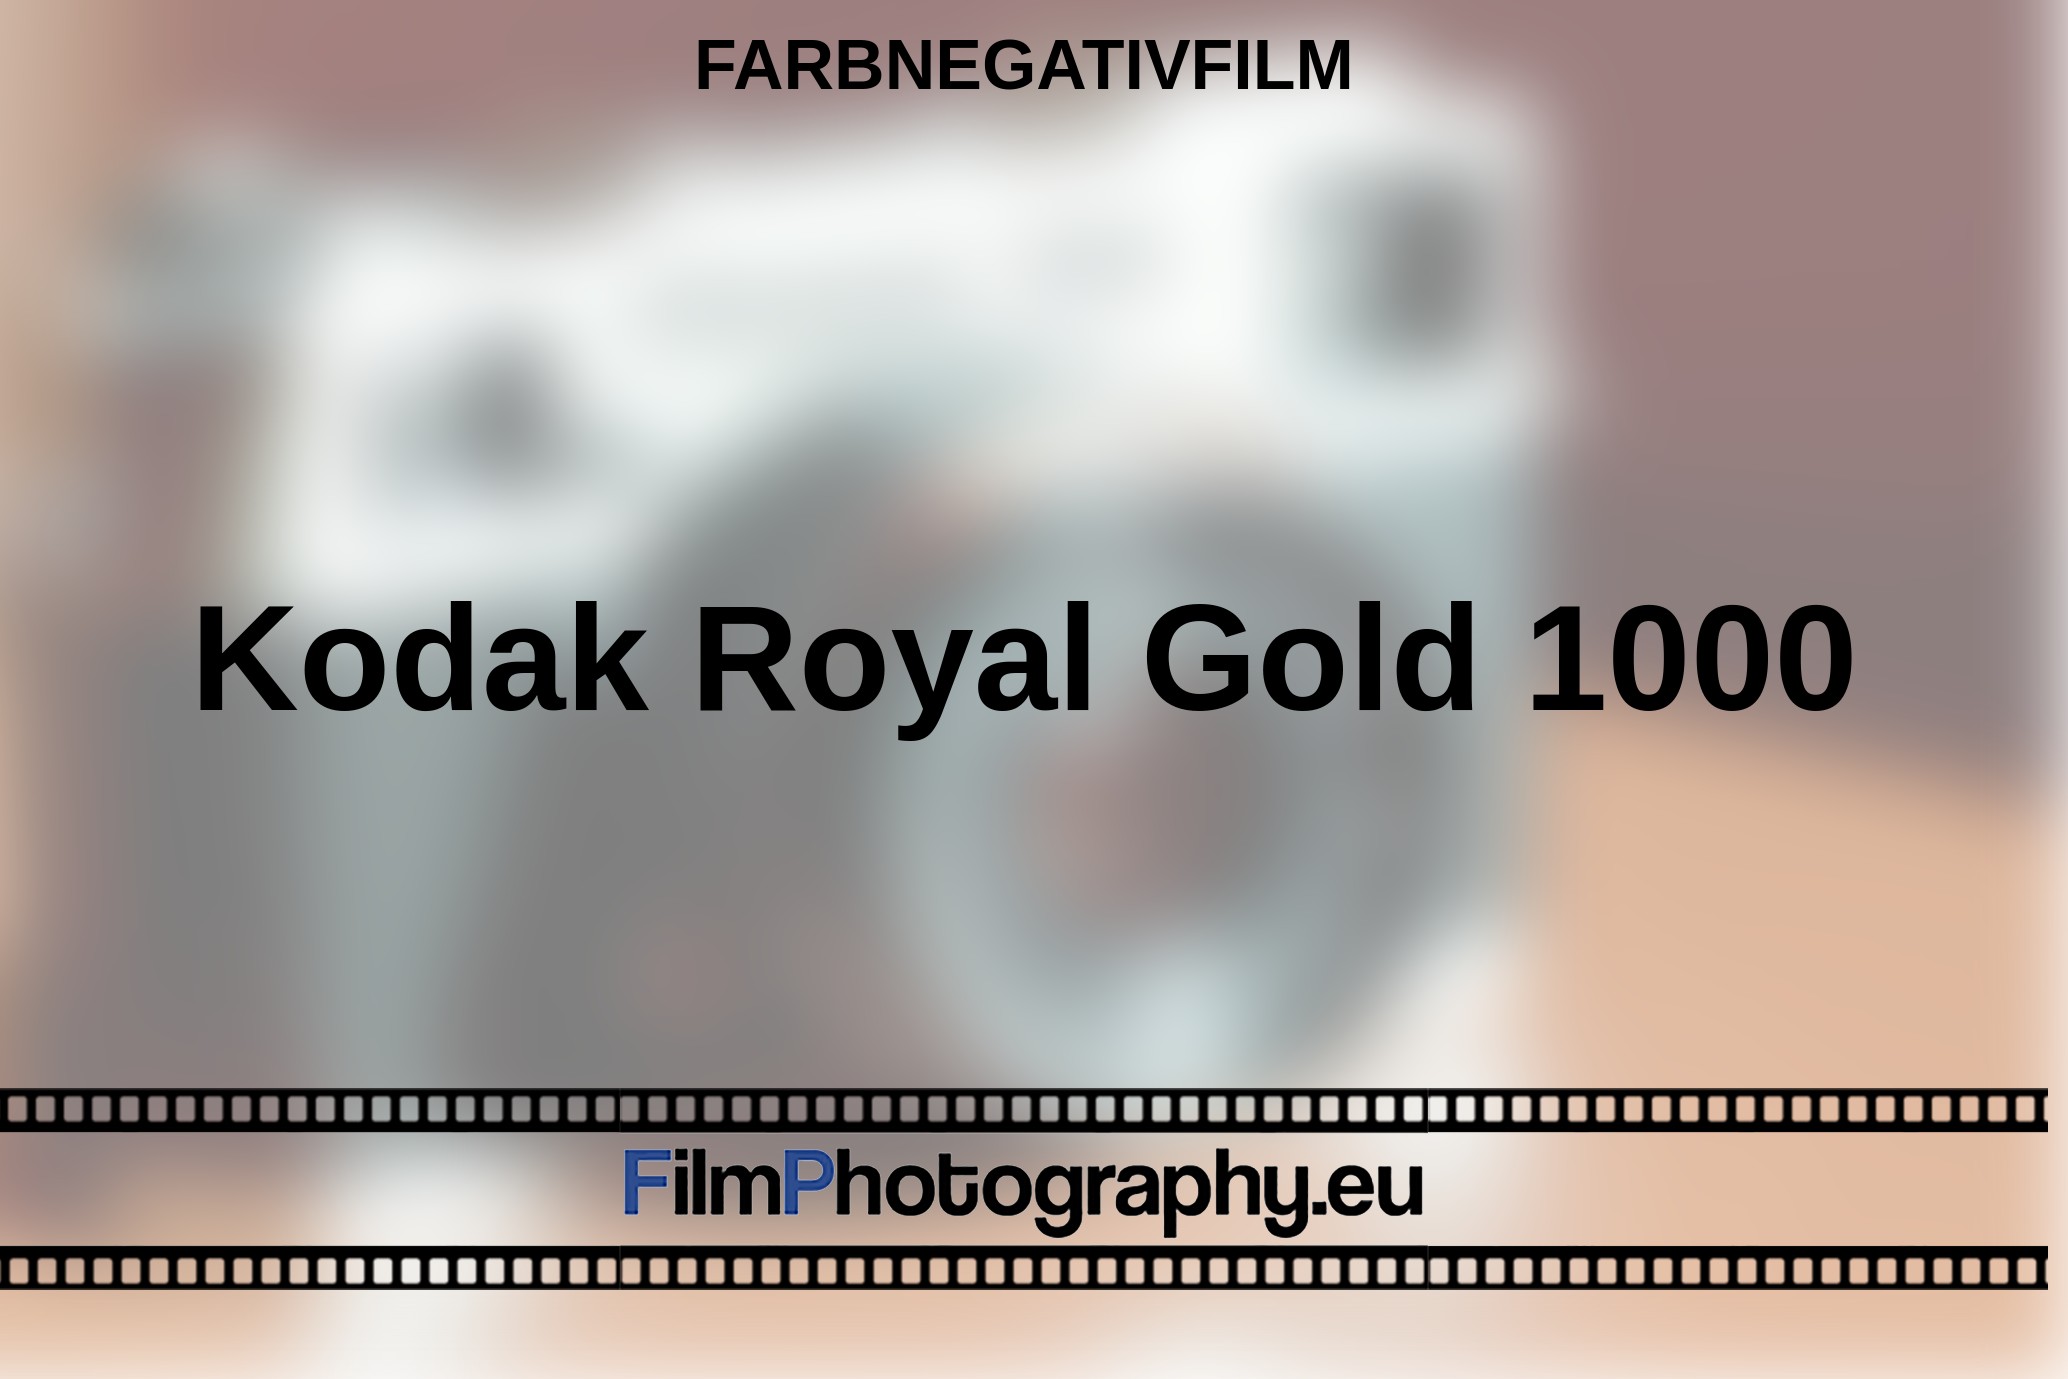 Kodak-Royal-Gold-1000-Farbnegativfilm-bnv.jpg